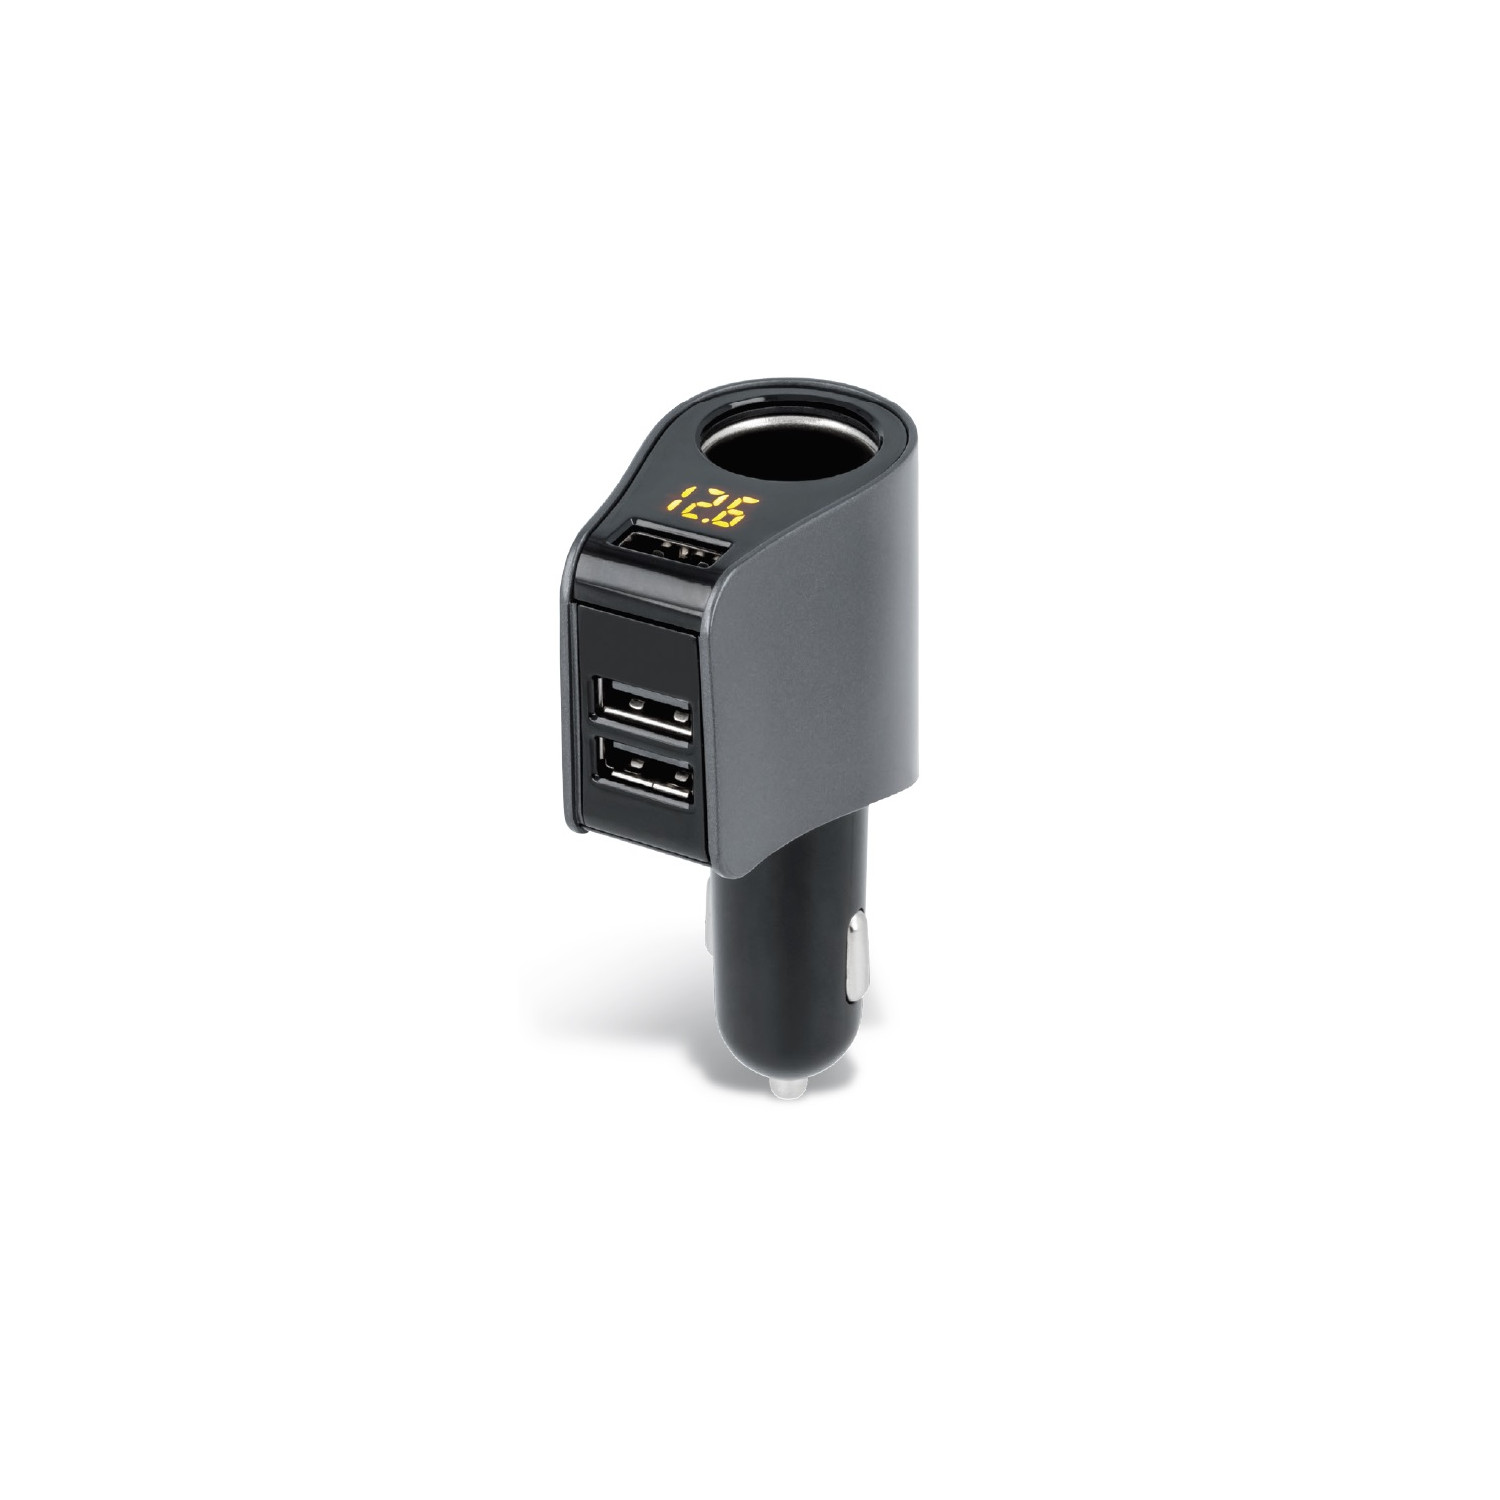 USB Handy Kfz Ladegerät Adapter für Zigarettenanzünder, 19,95 €